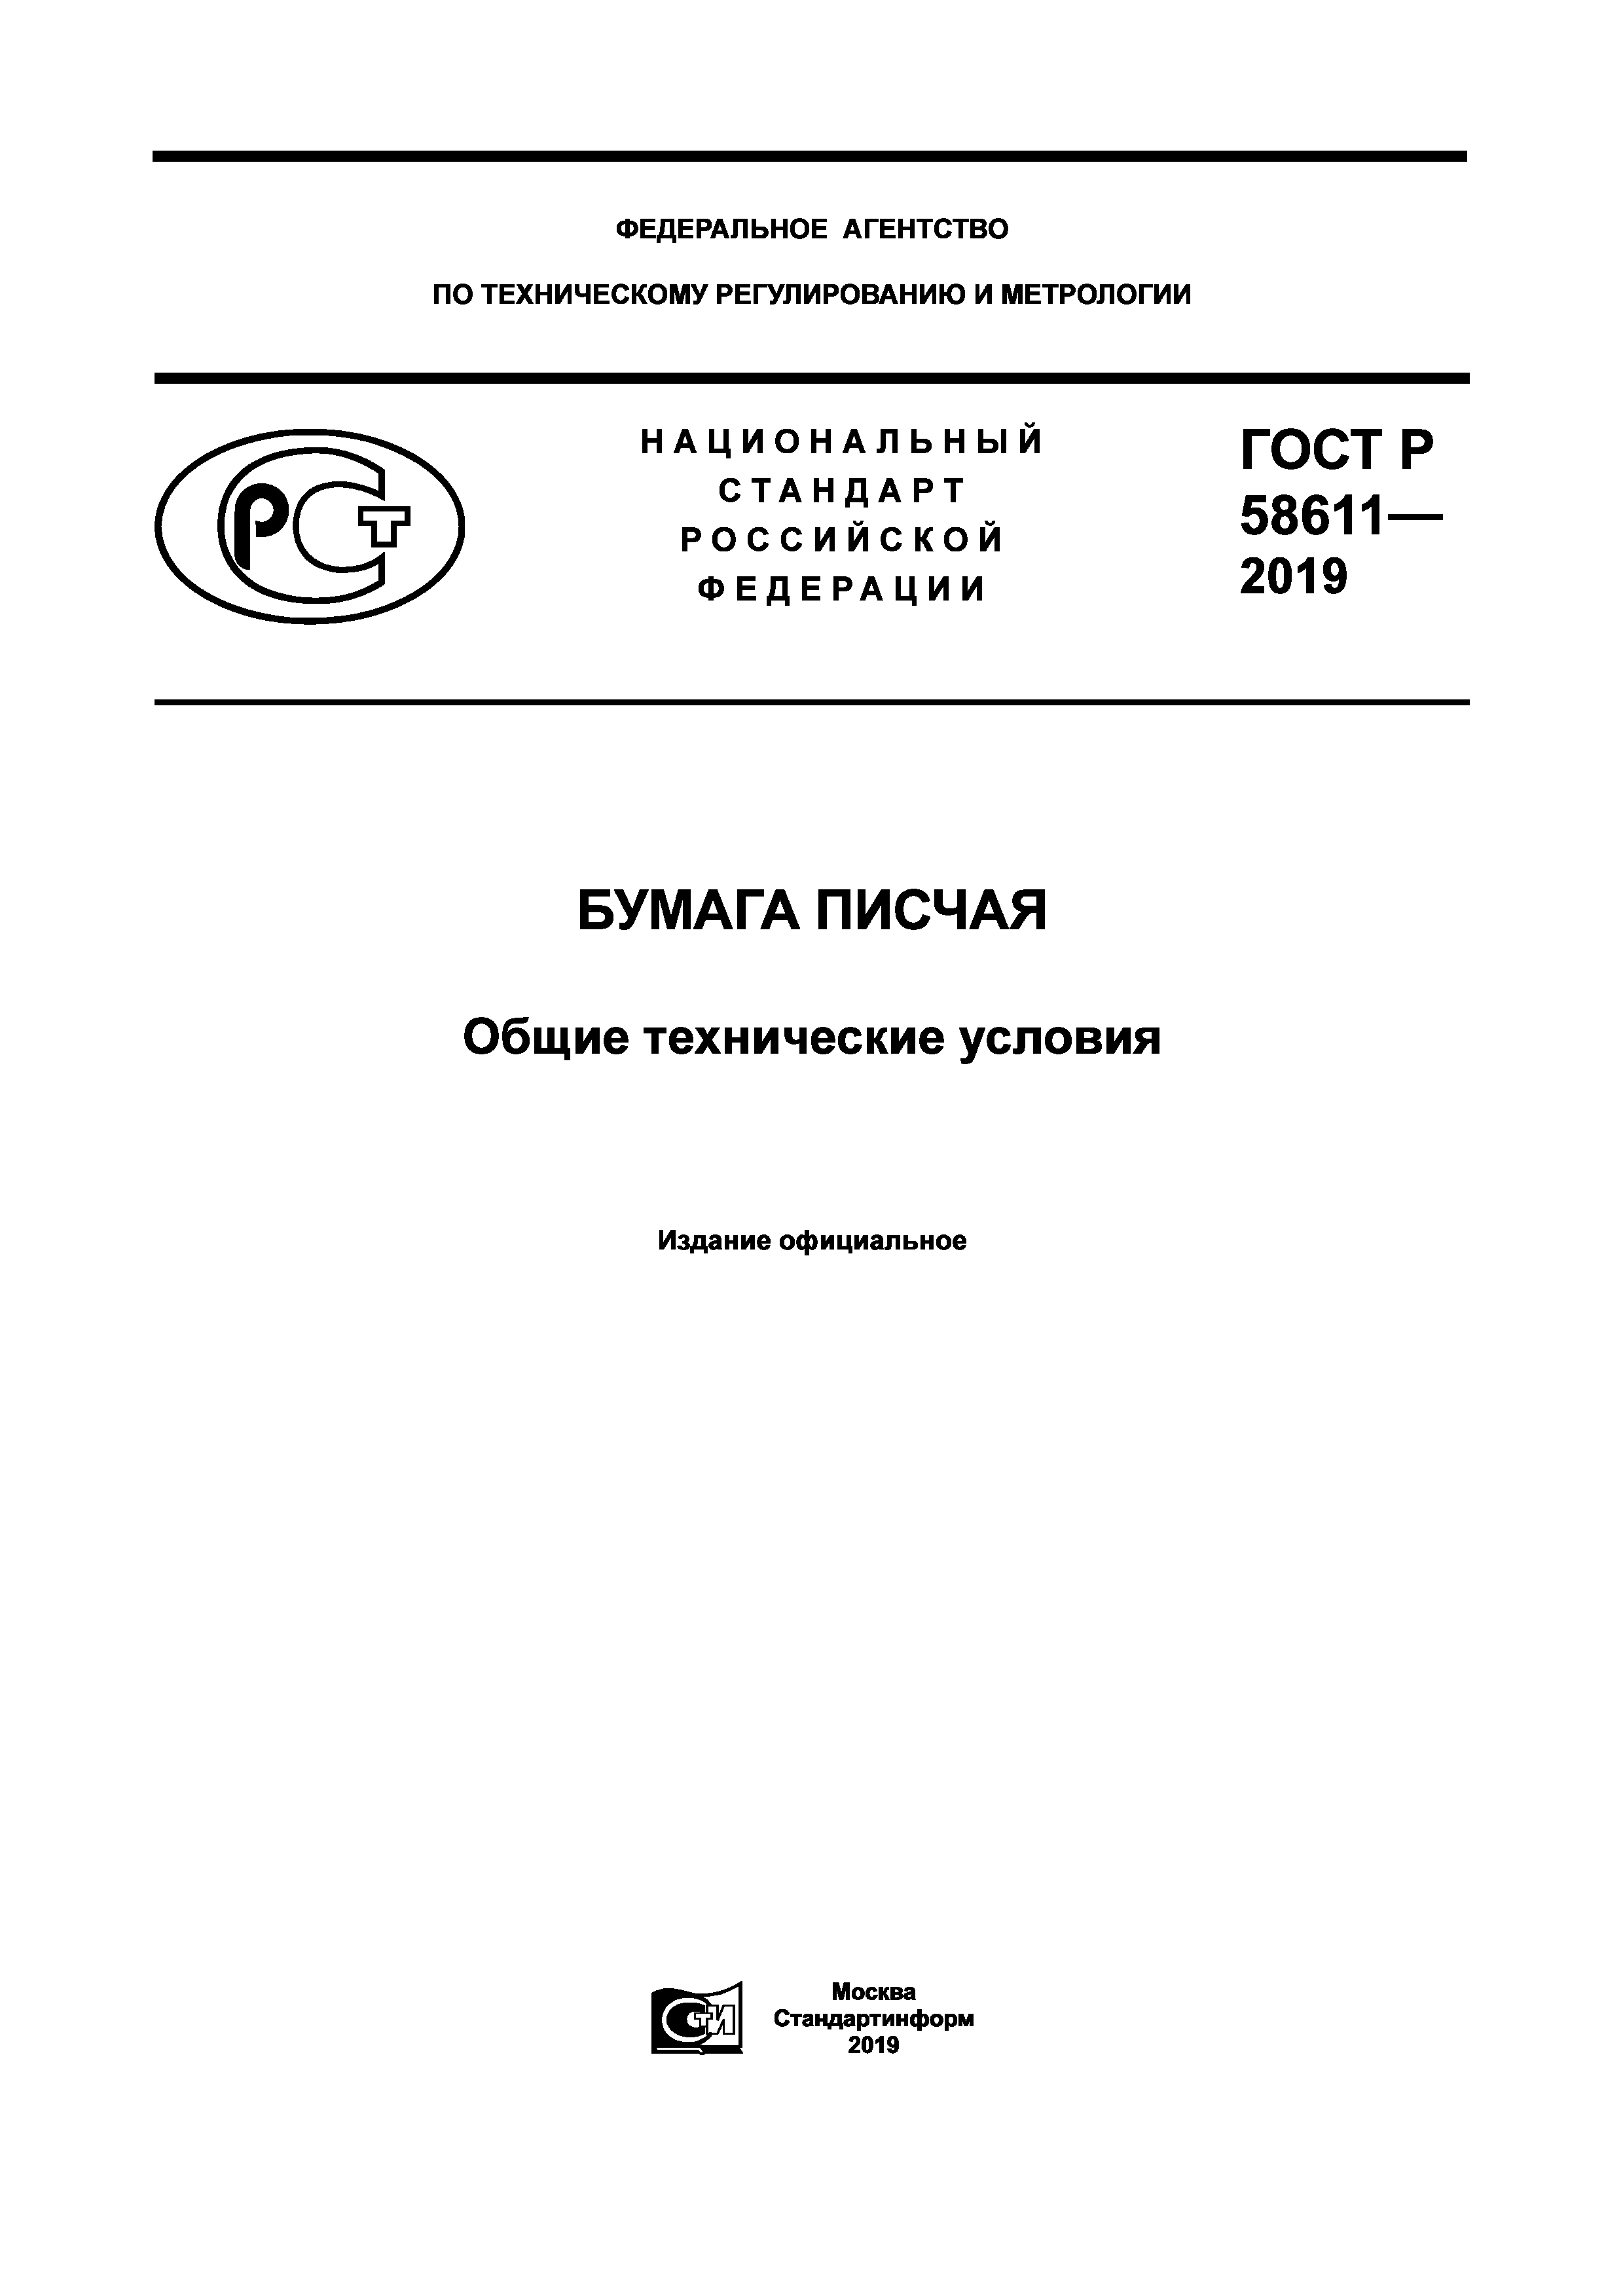 ГОСТ Р 58611-2019